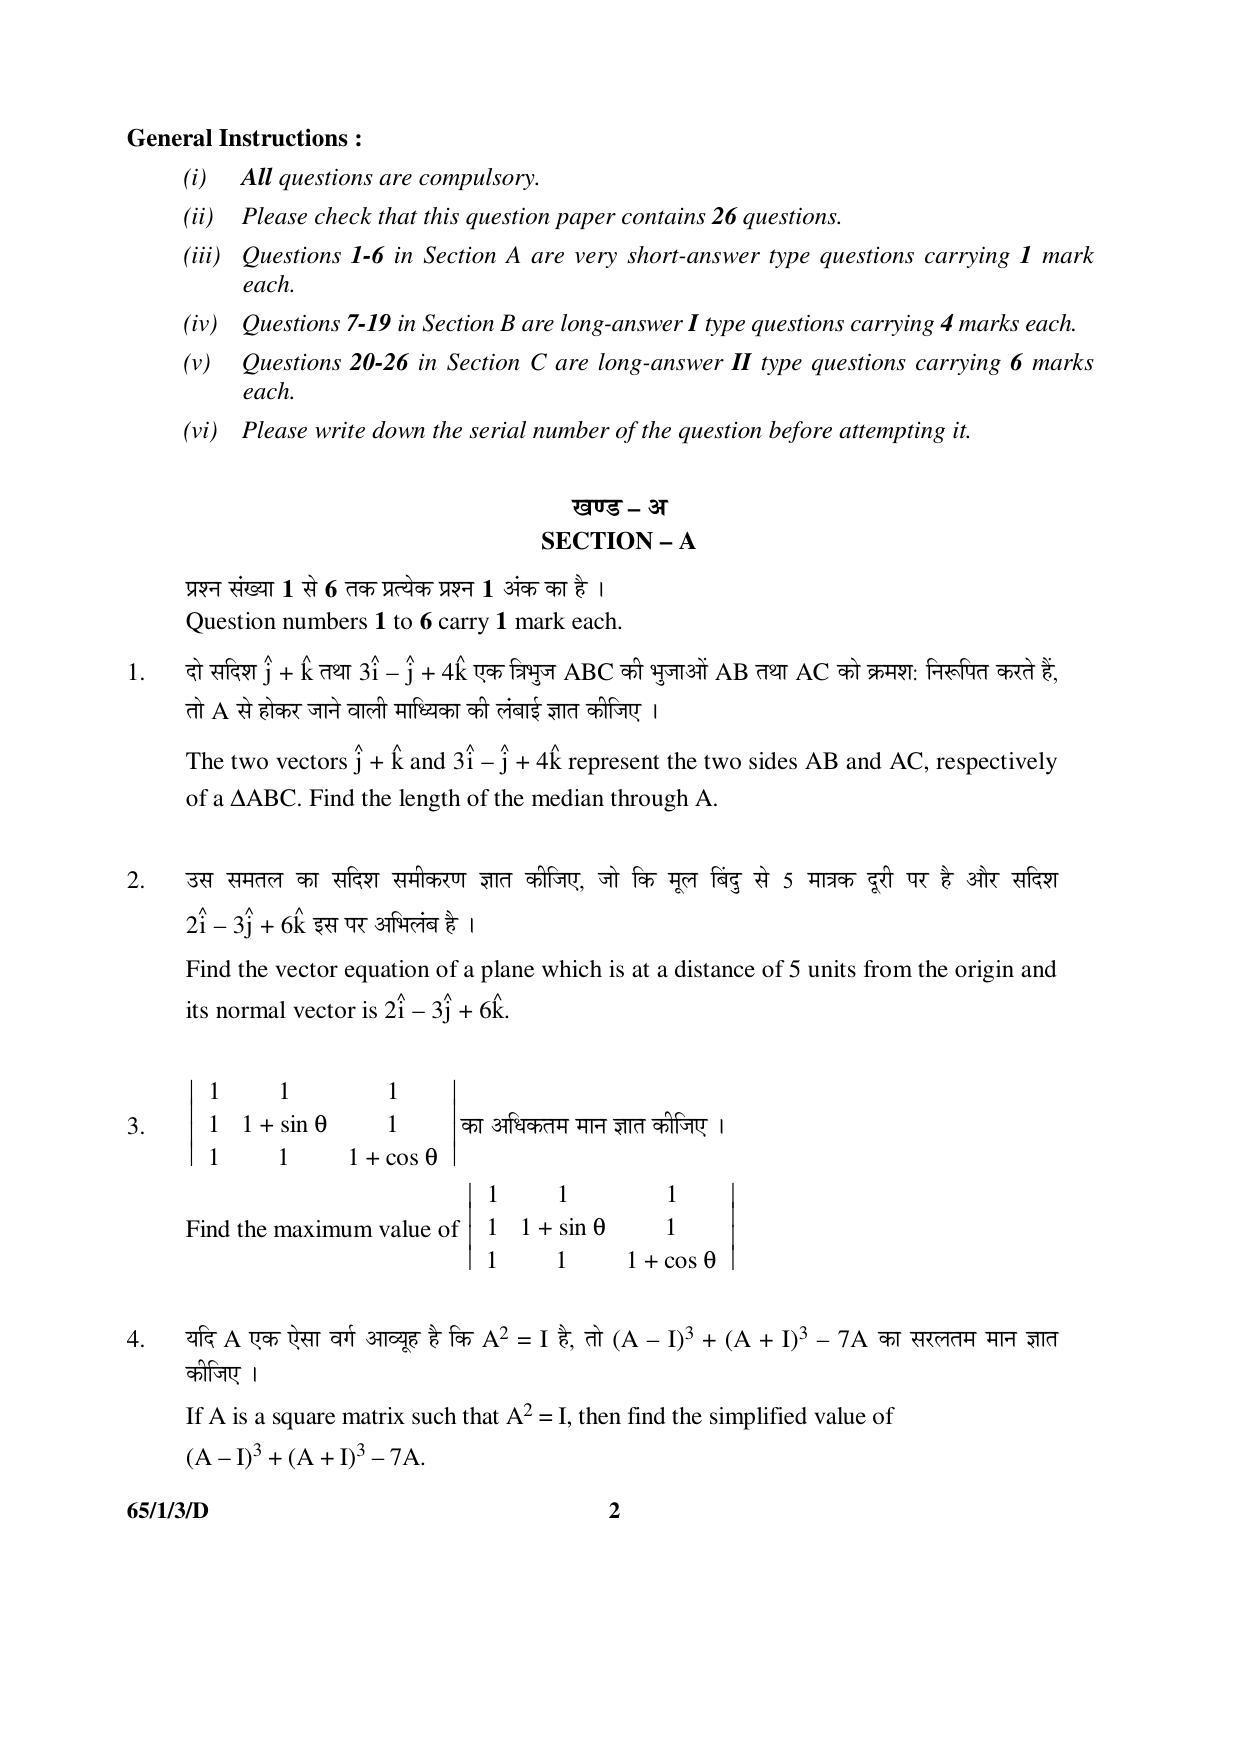 CBSE Class 12 65-1-3-D MATHEMATICS 2016 Question Paper - Page 2